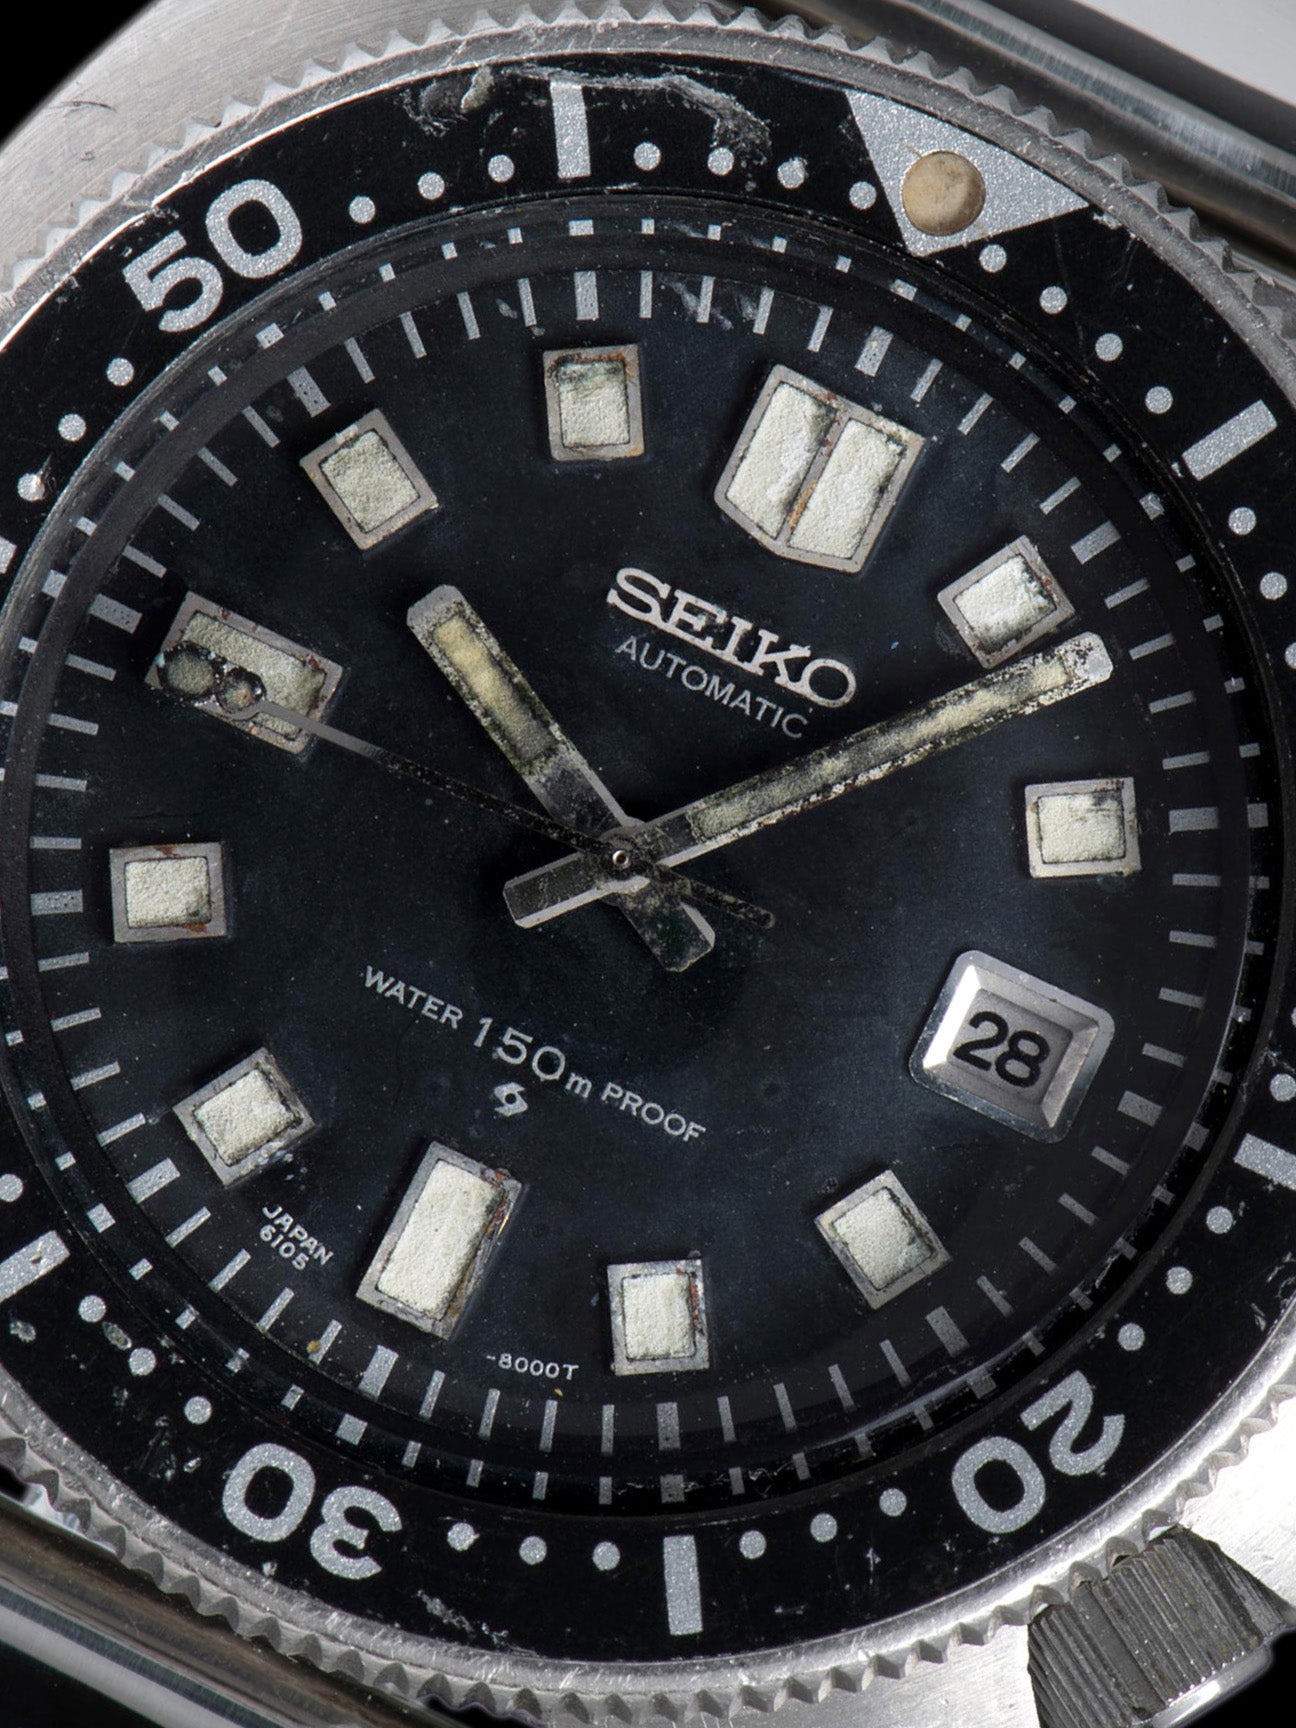 1970 Seiko Diver Proof / Proof (Ref. 6105-8110) 